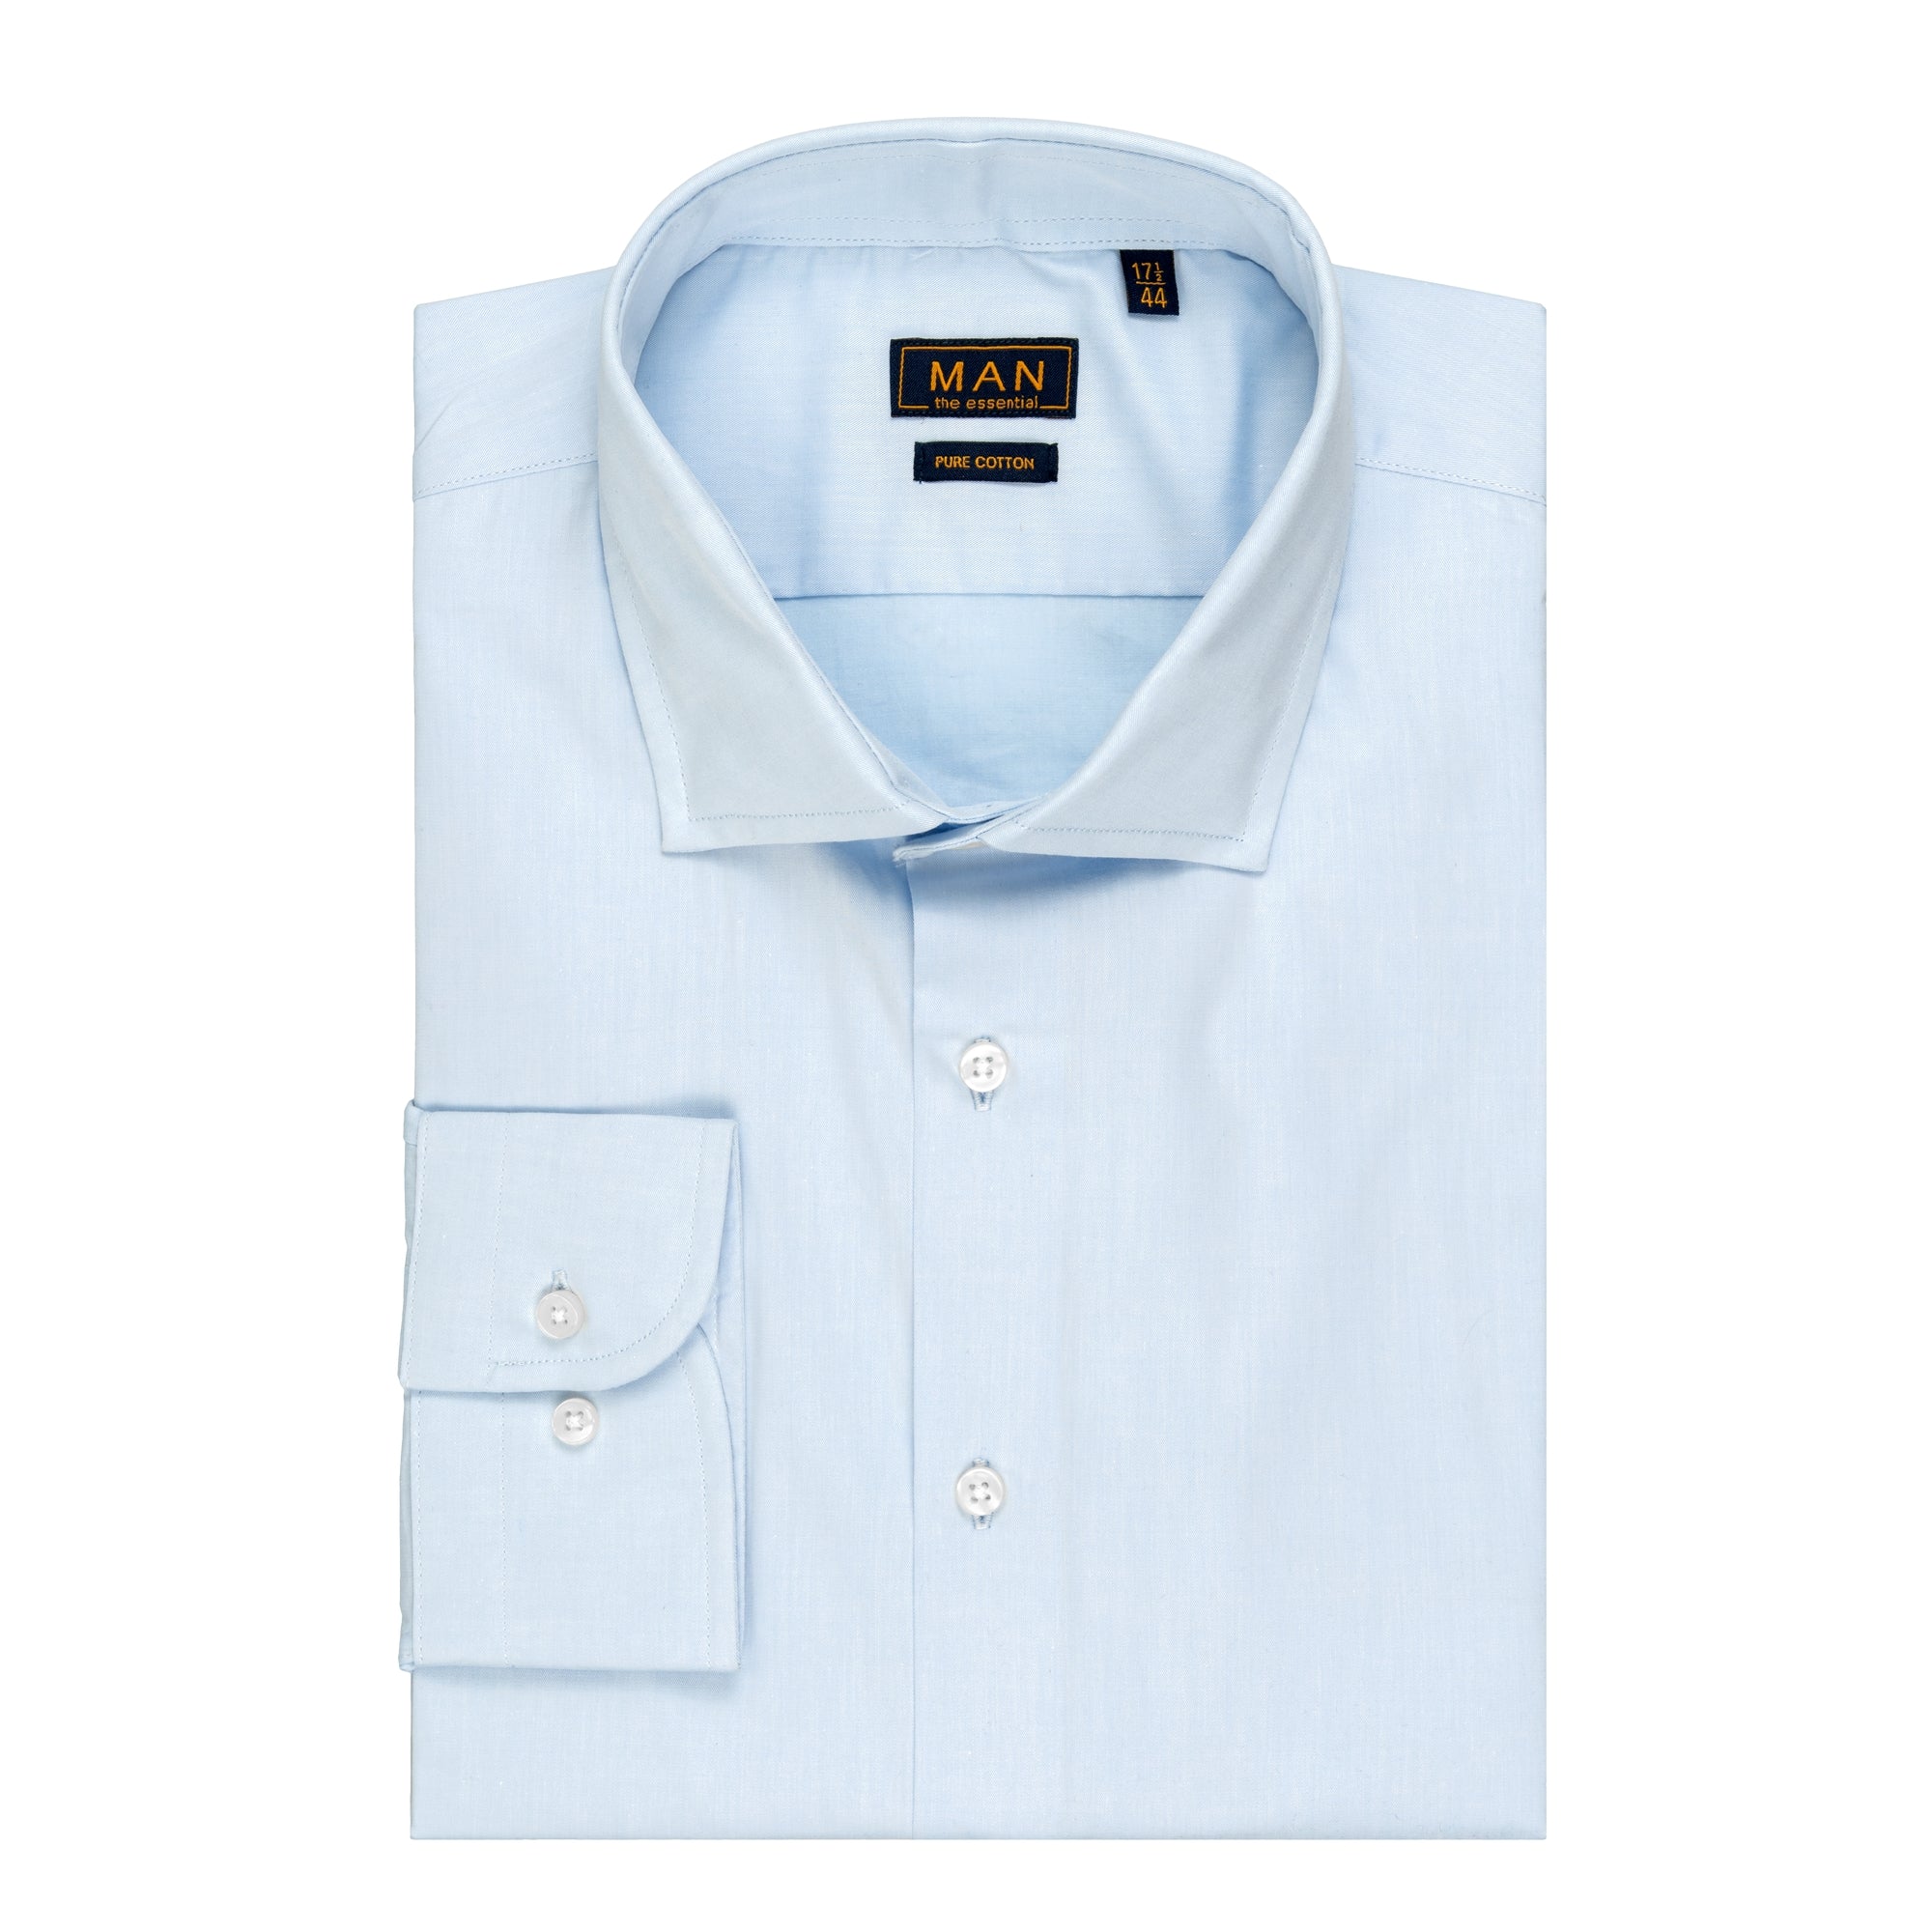 Regular fit cotton twill shirt